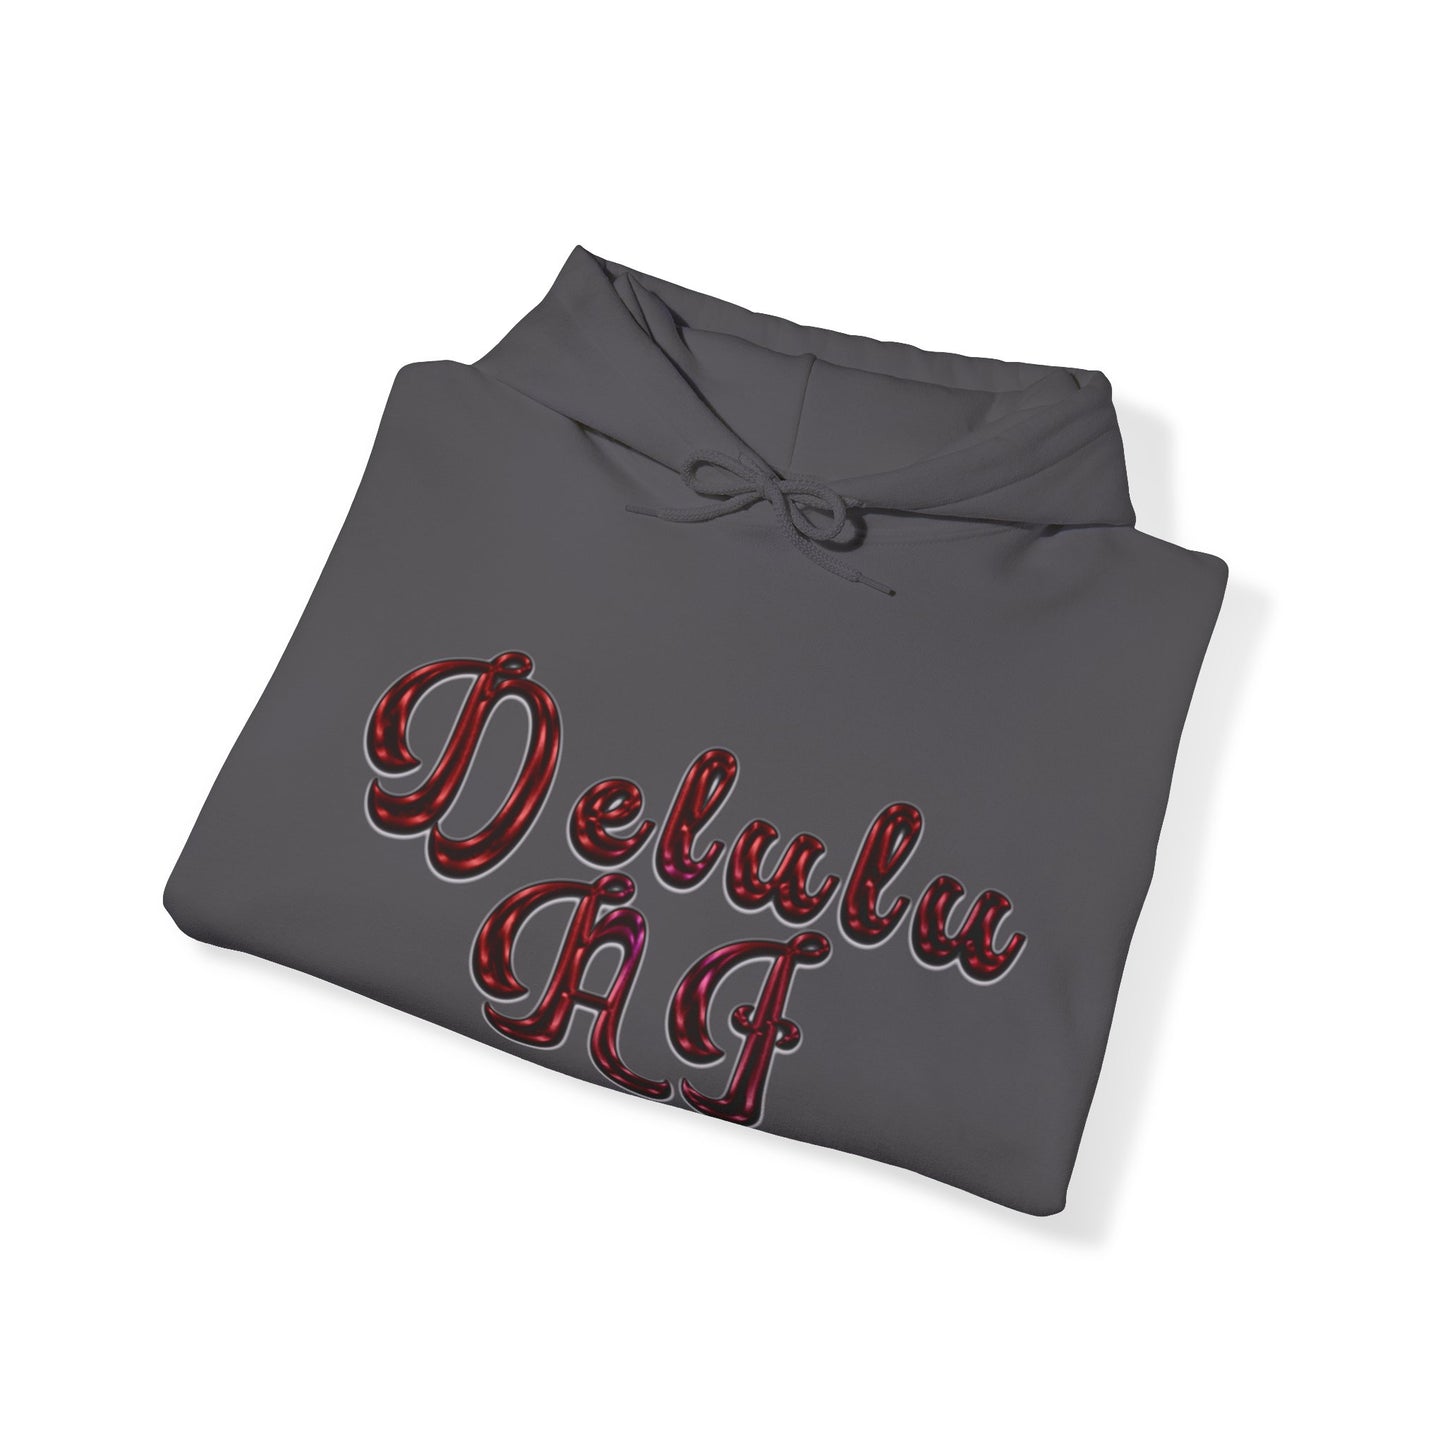 Fitz's Delulu AF Hooded Sweatshirt